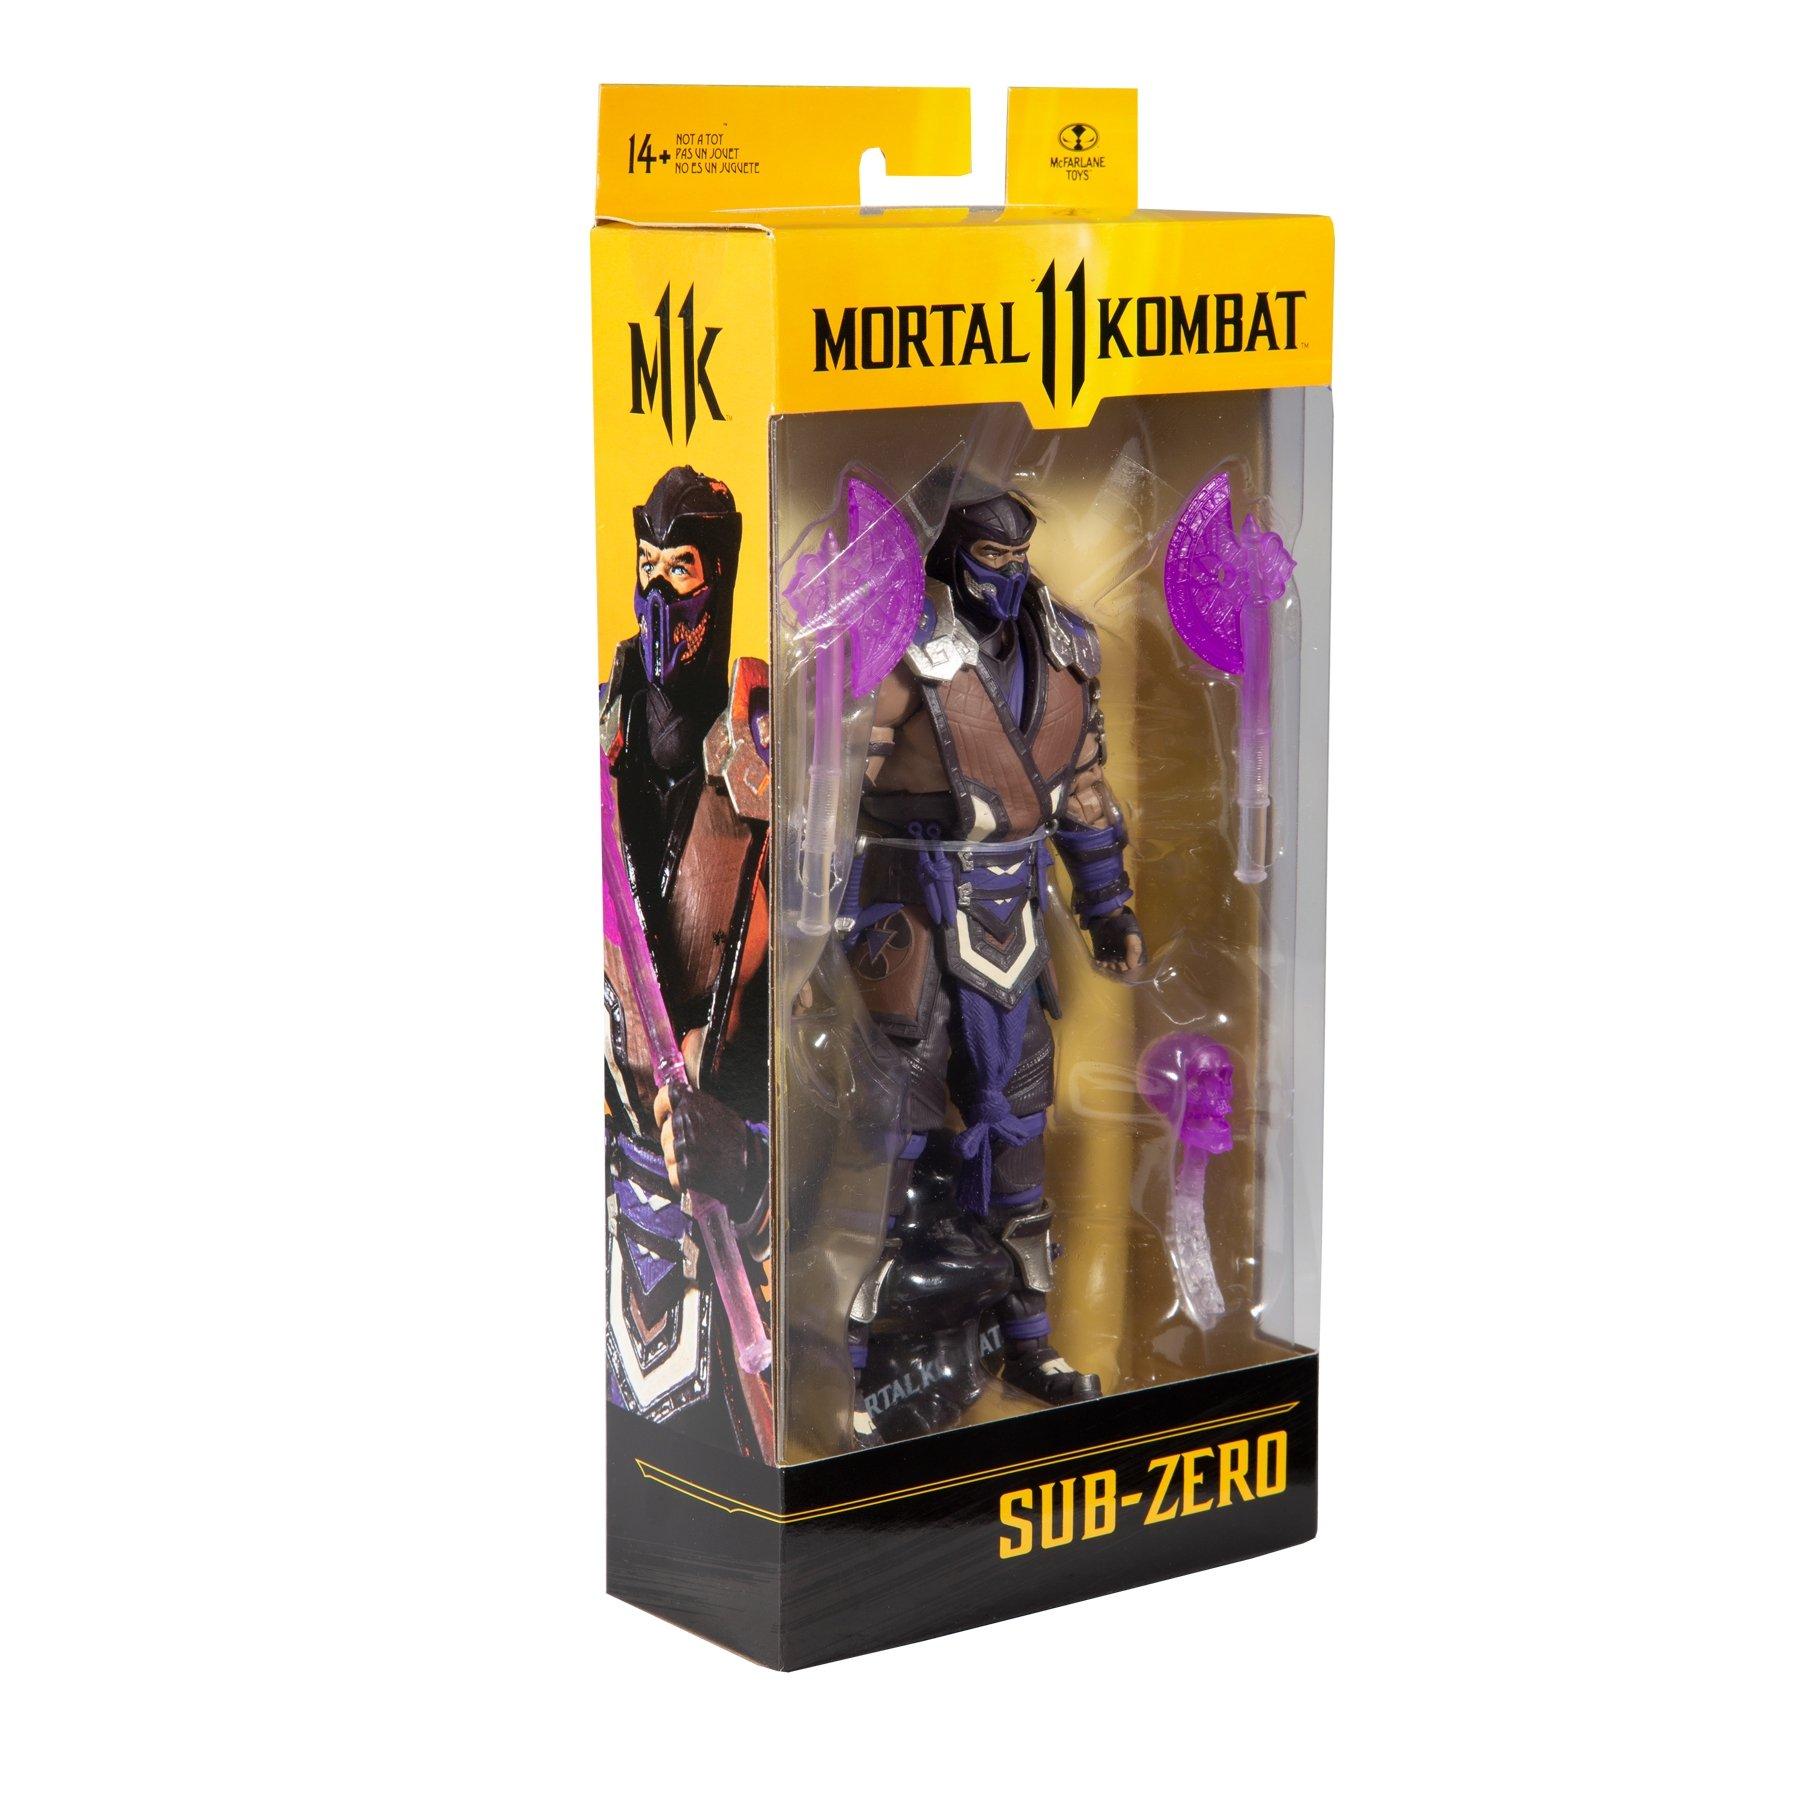 Original McFarlane Toys Mortal Kombat - Baraka (Variant) 7-inch